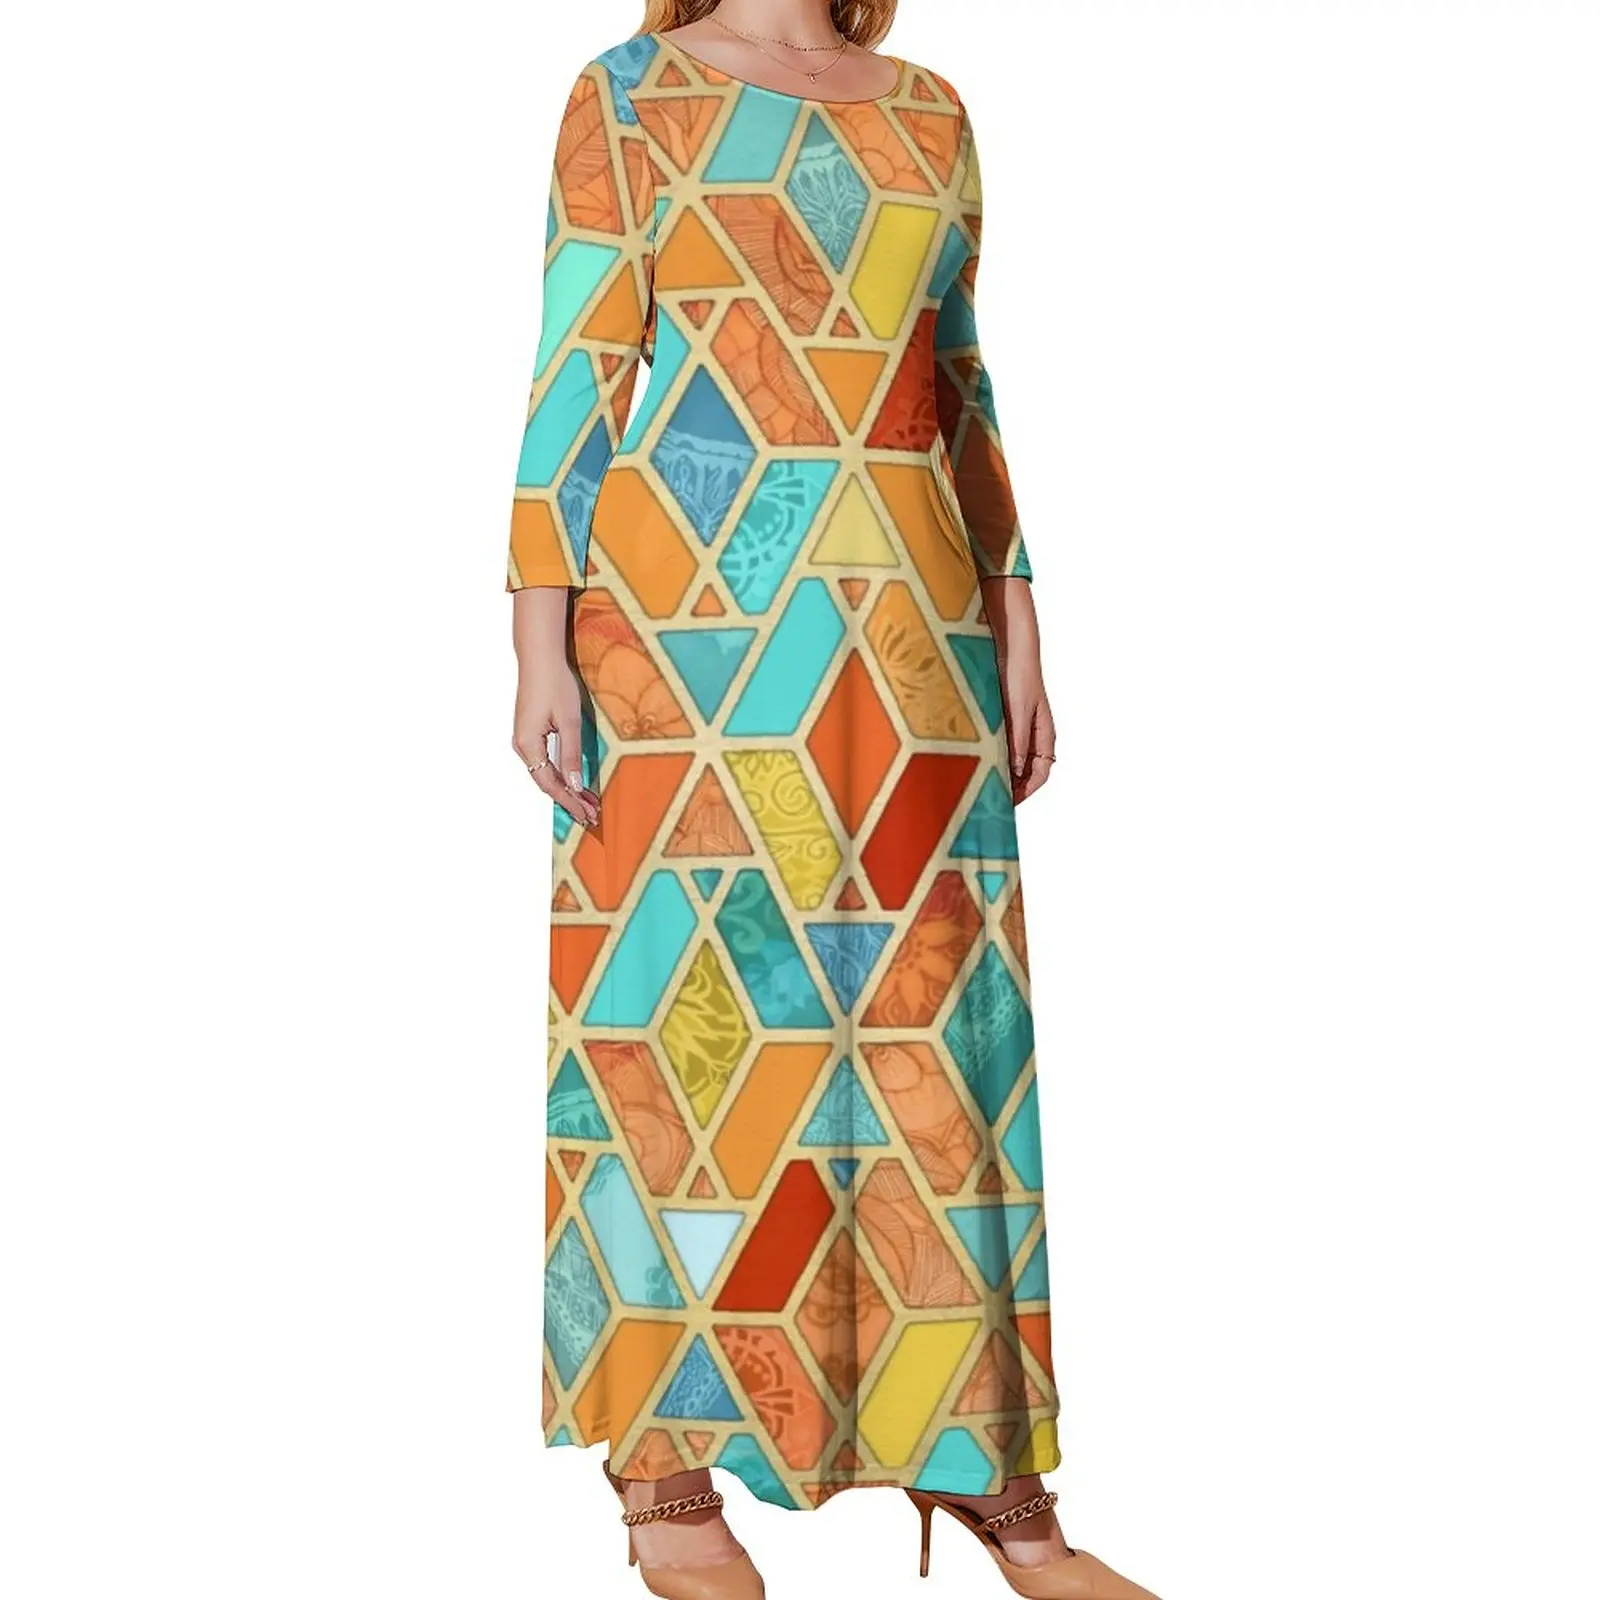 Abstract Patchwork Dress Geometric Tile Print Beach Dresses Long Sleeve Fashion Long Maxi Dress Cute Clothes Plus Size 4XL 5XL